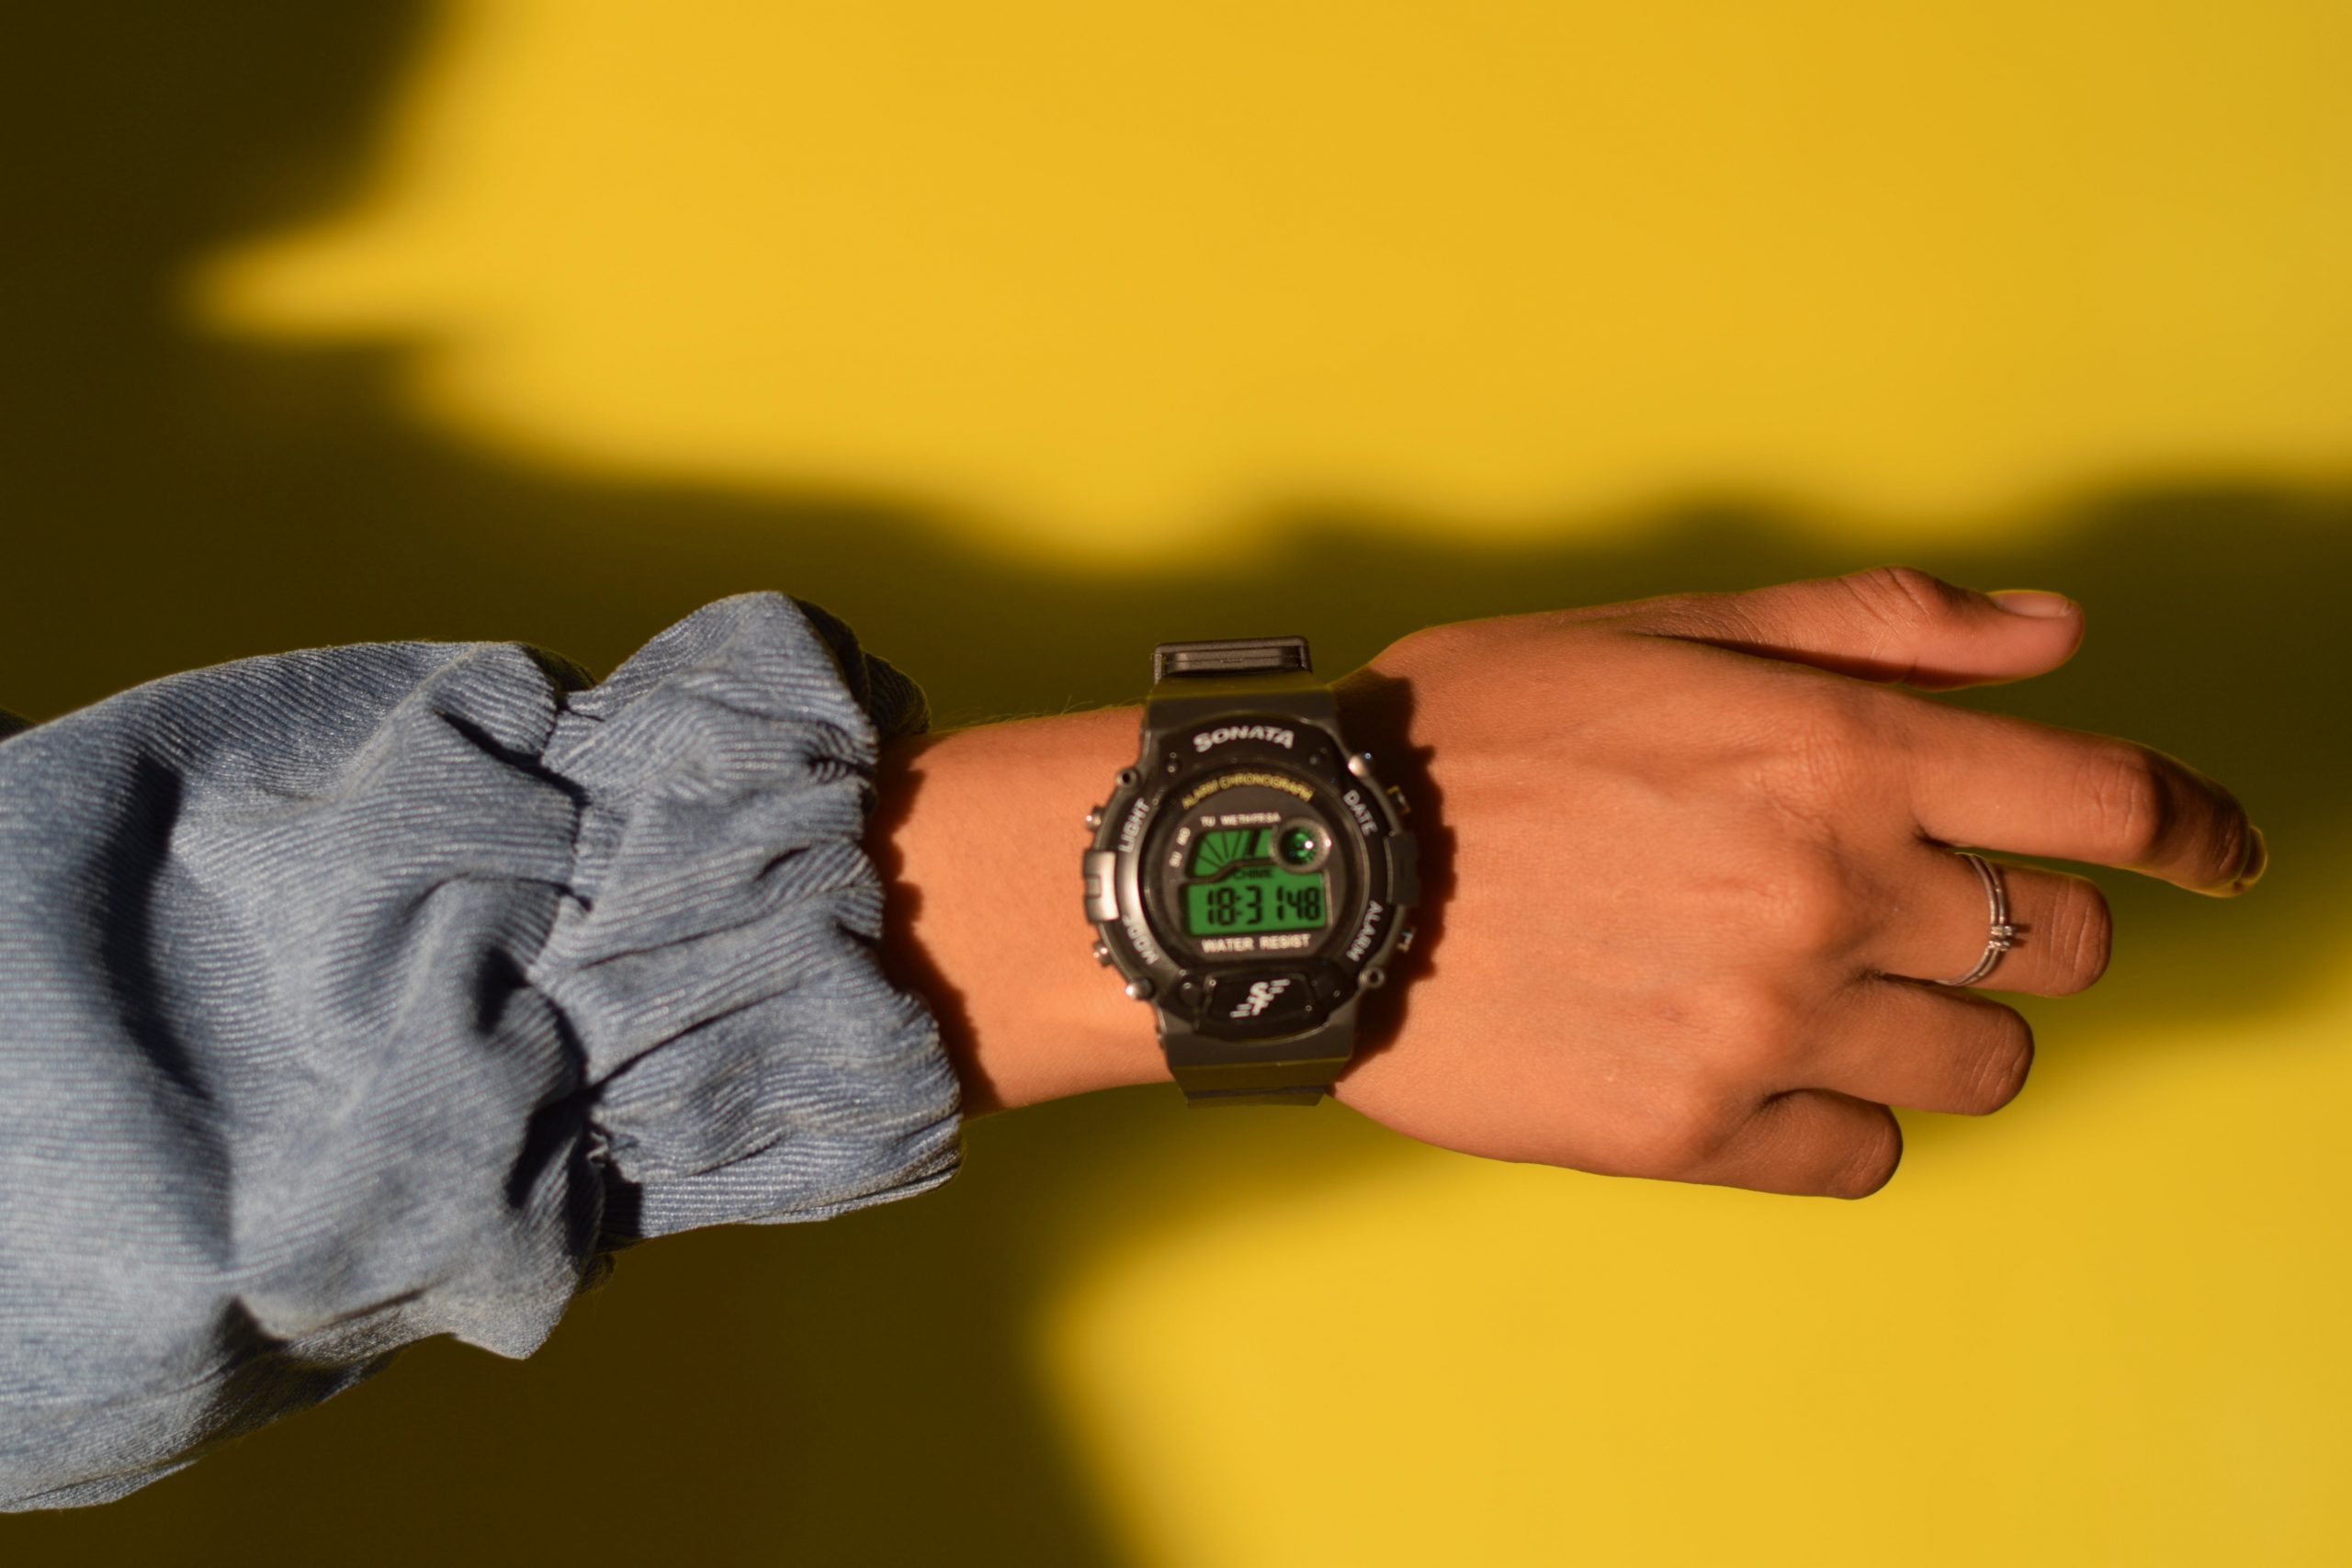 A digital wrist watch